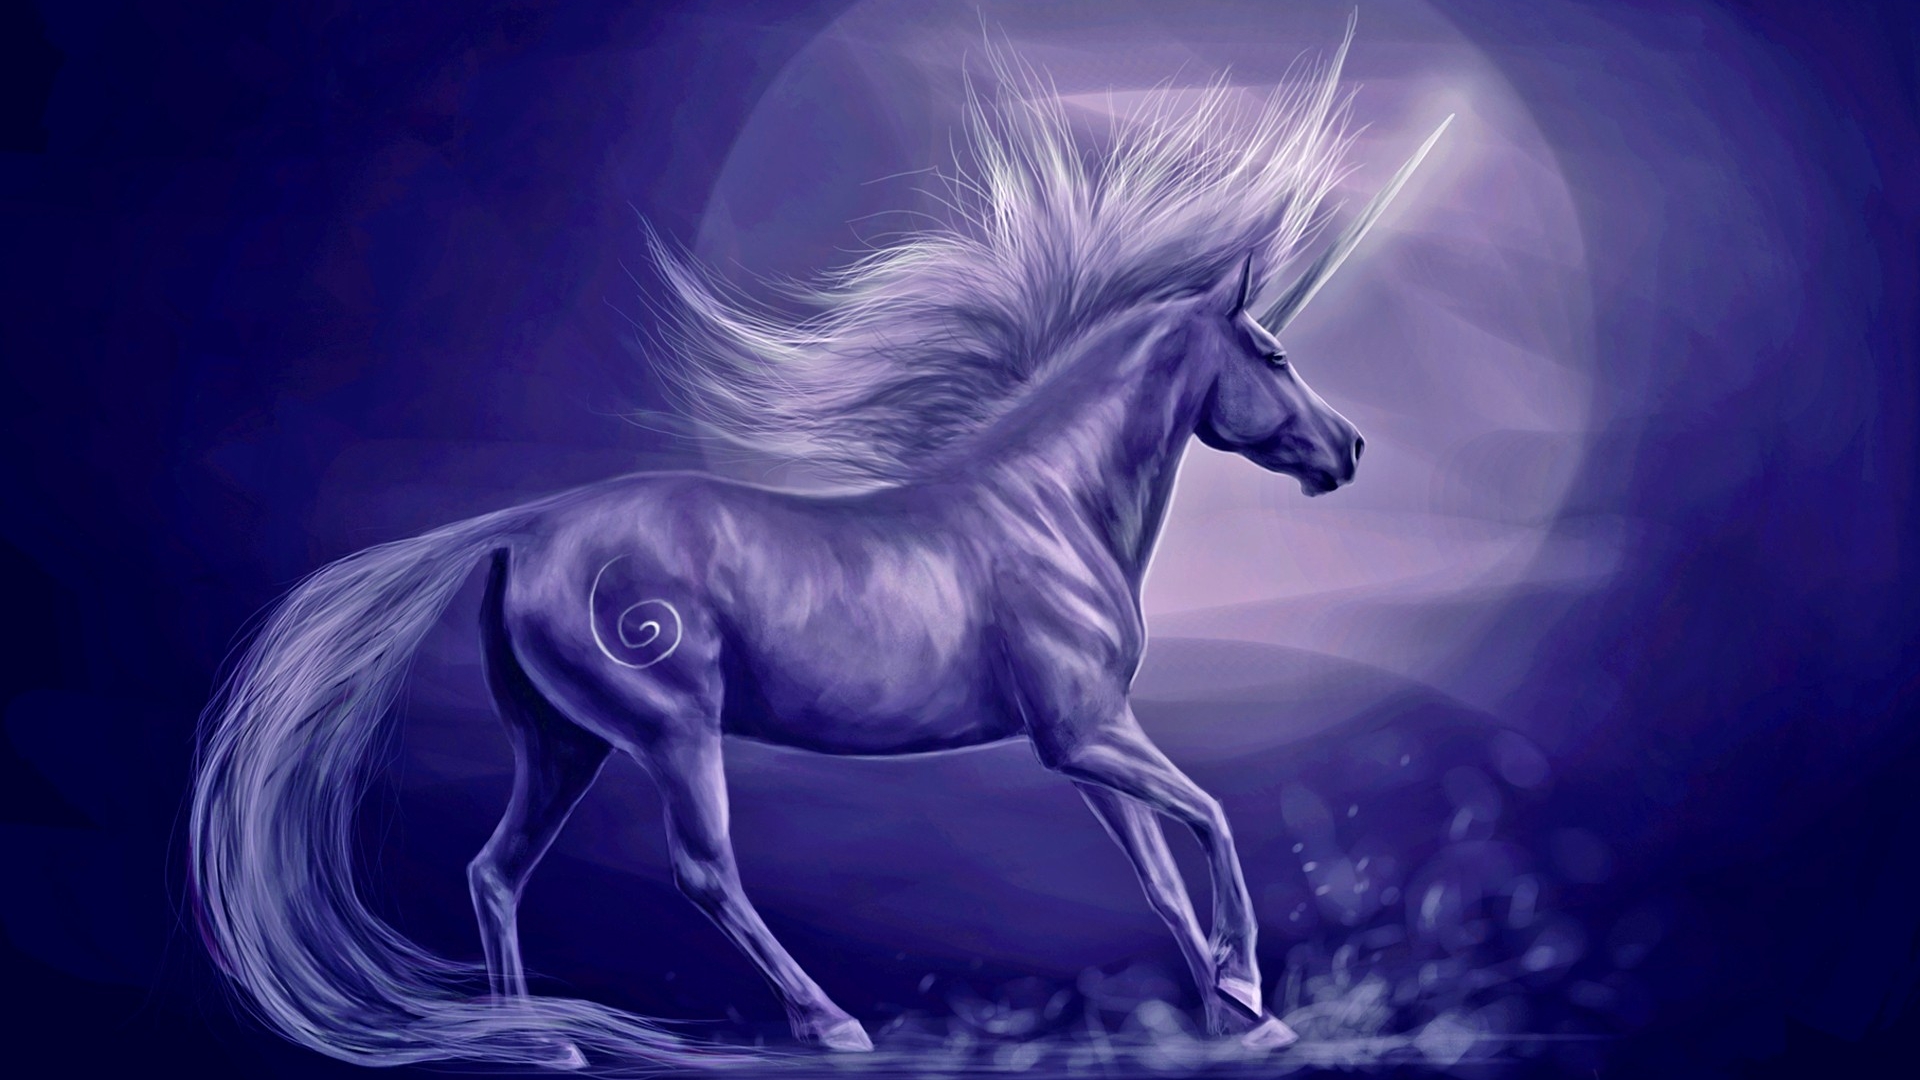 Unicorn Full HD Wallpaper and Background Image | 1920x1080 | ID:564425